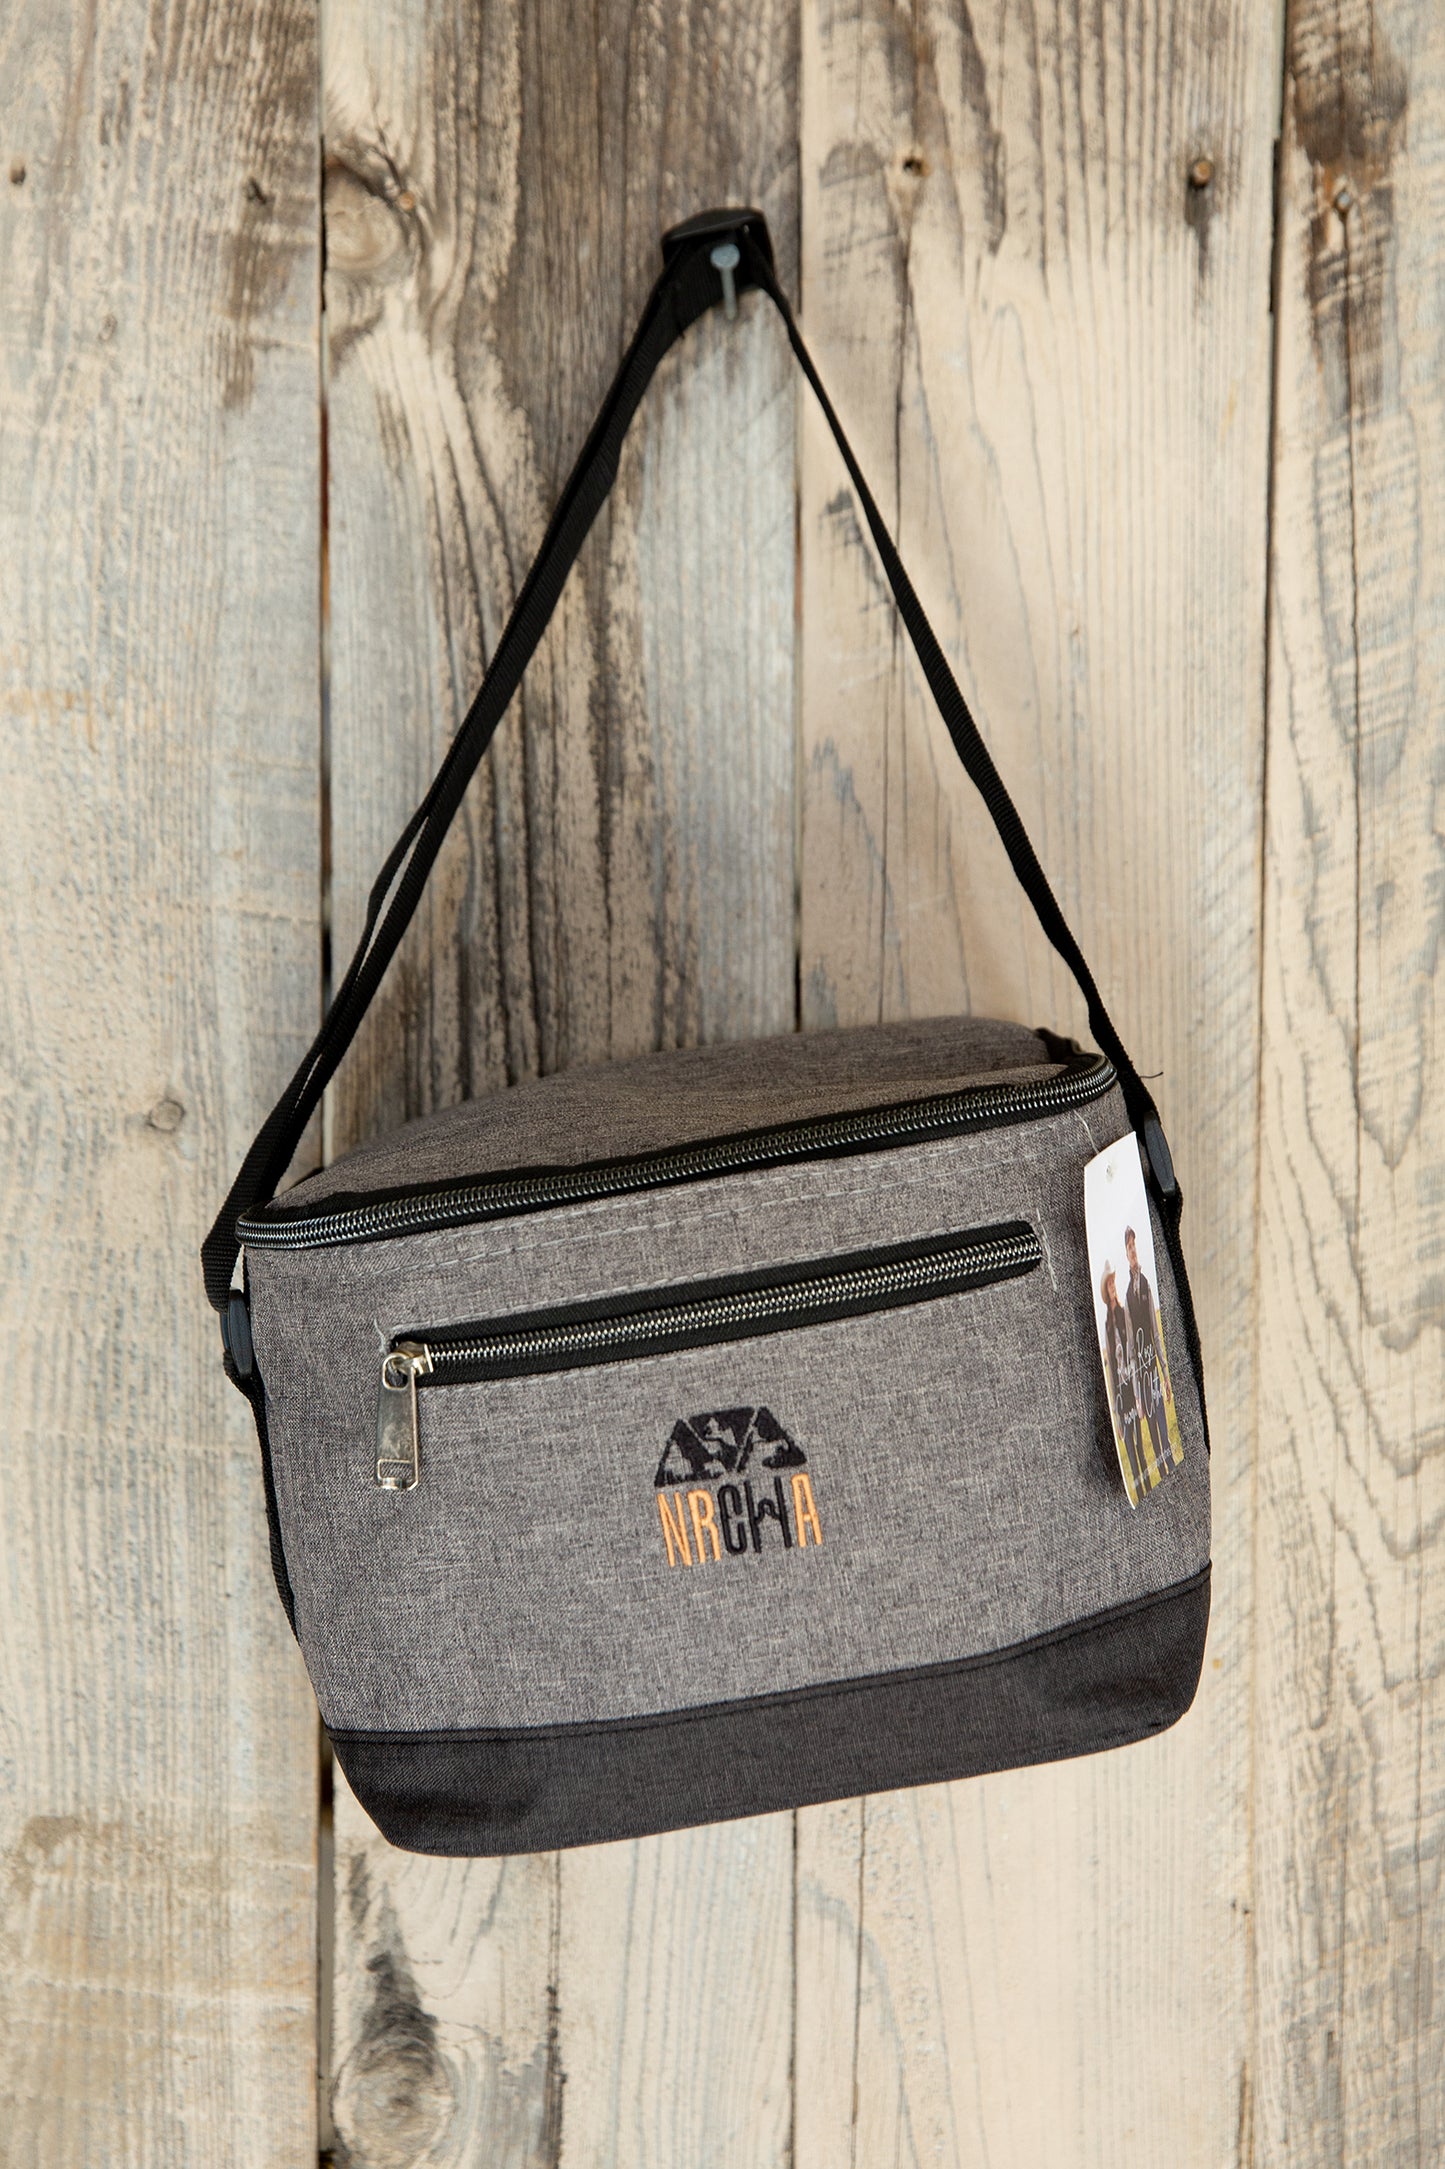 NRCHA Grey Bag-One Cooler Bag